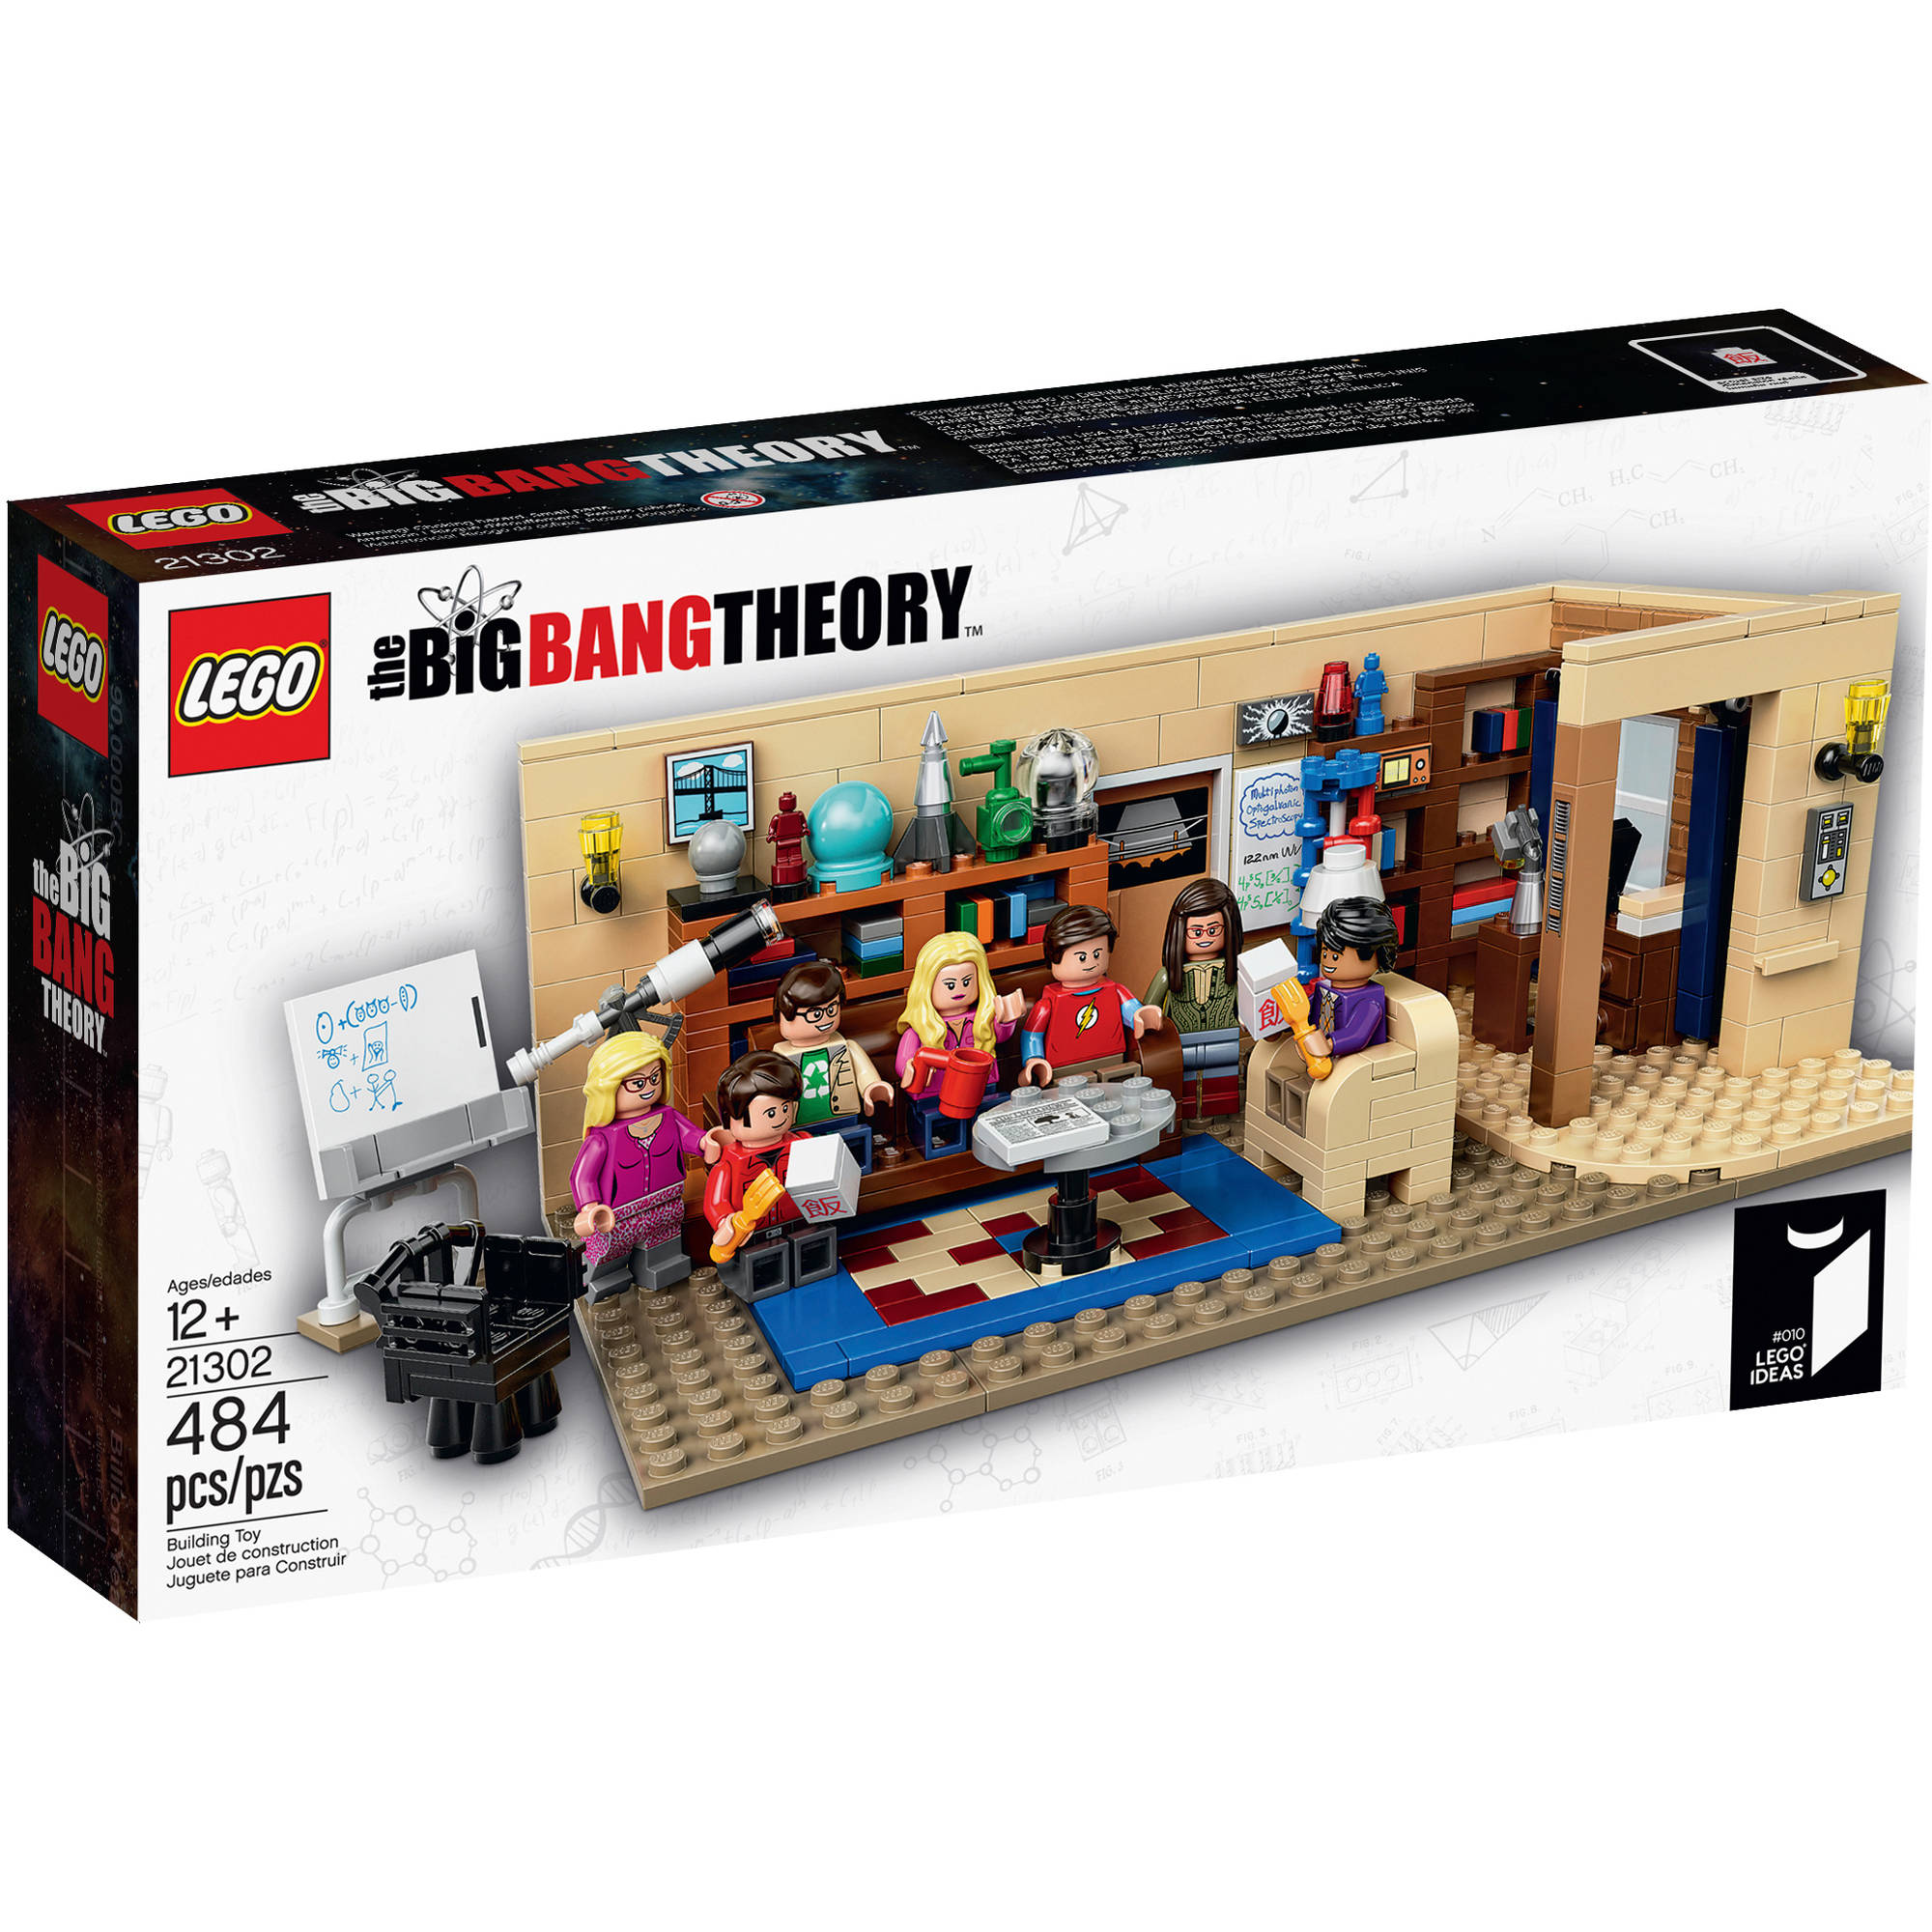 LEGO Ideas The Big Bang Theory, 21302 - image 1 of 6